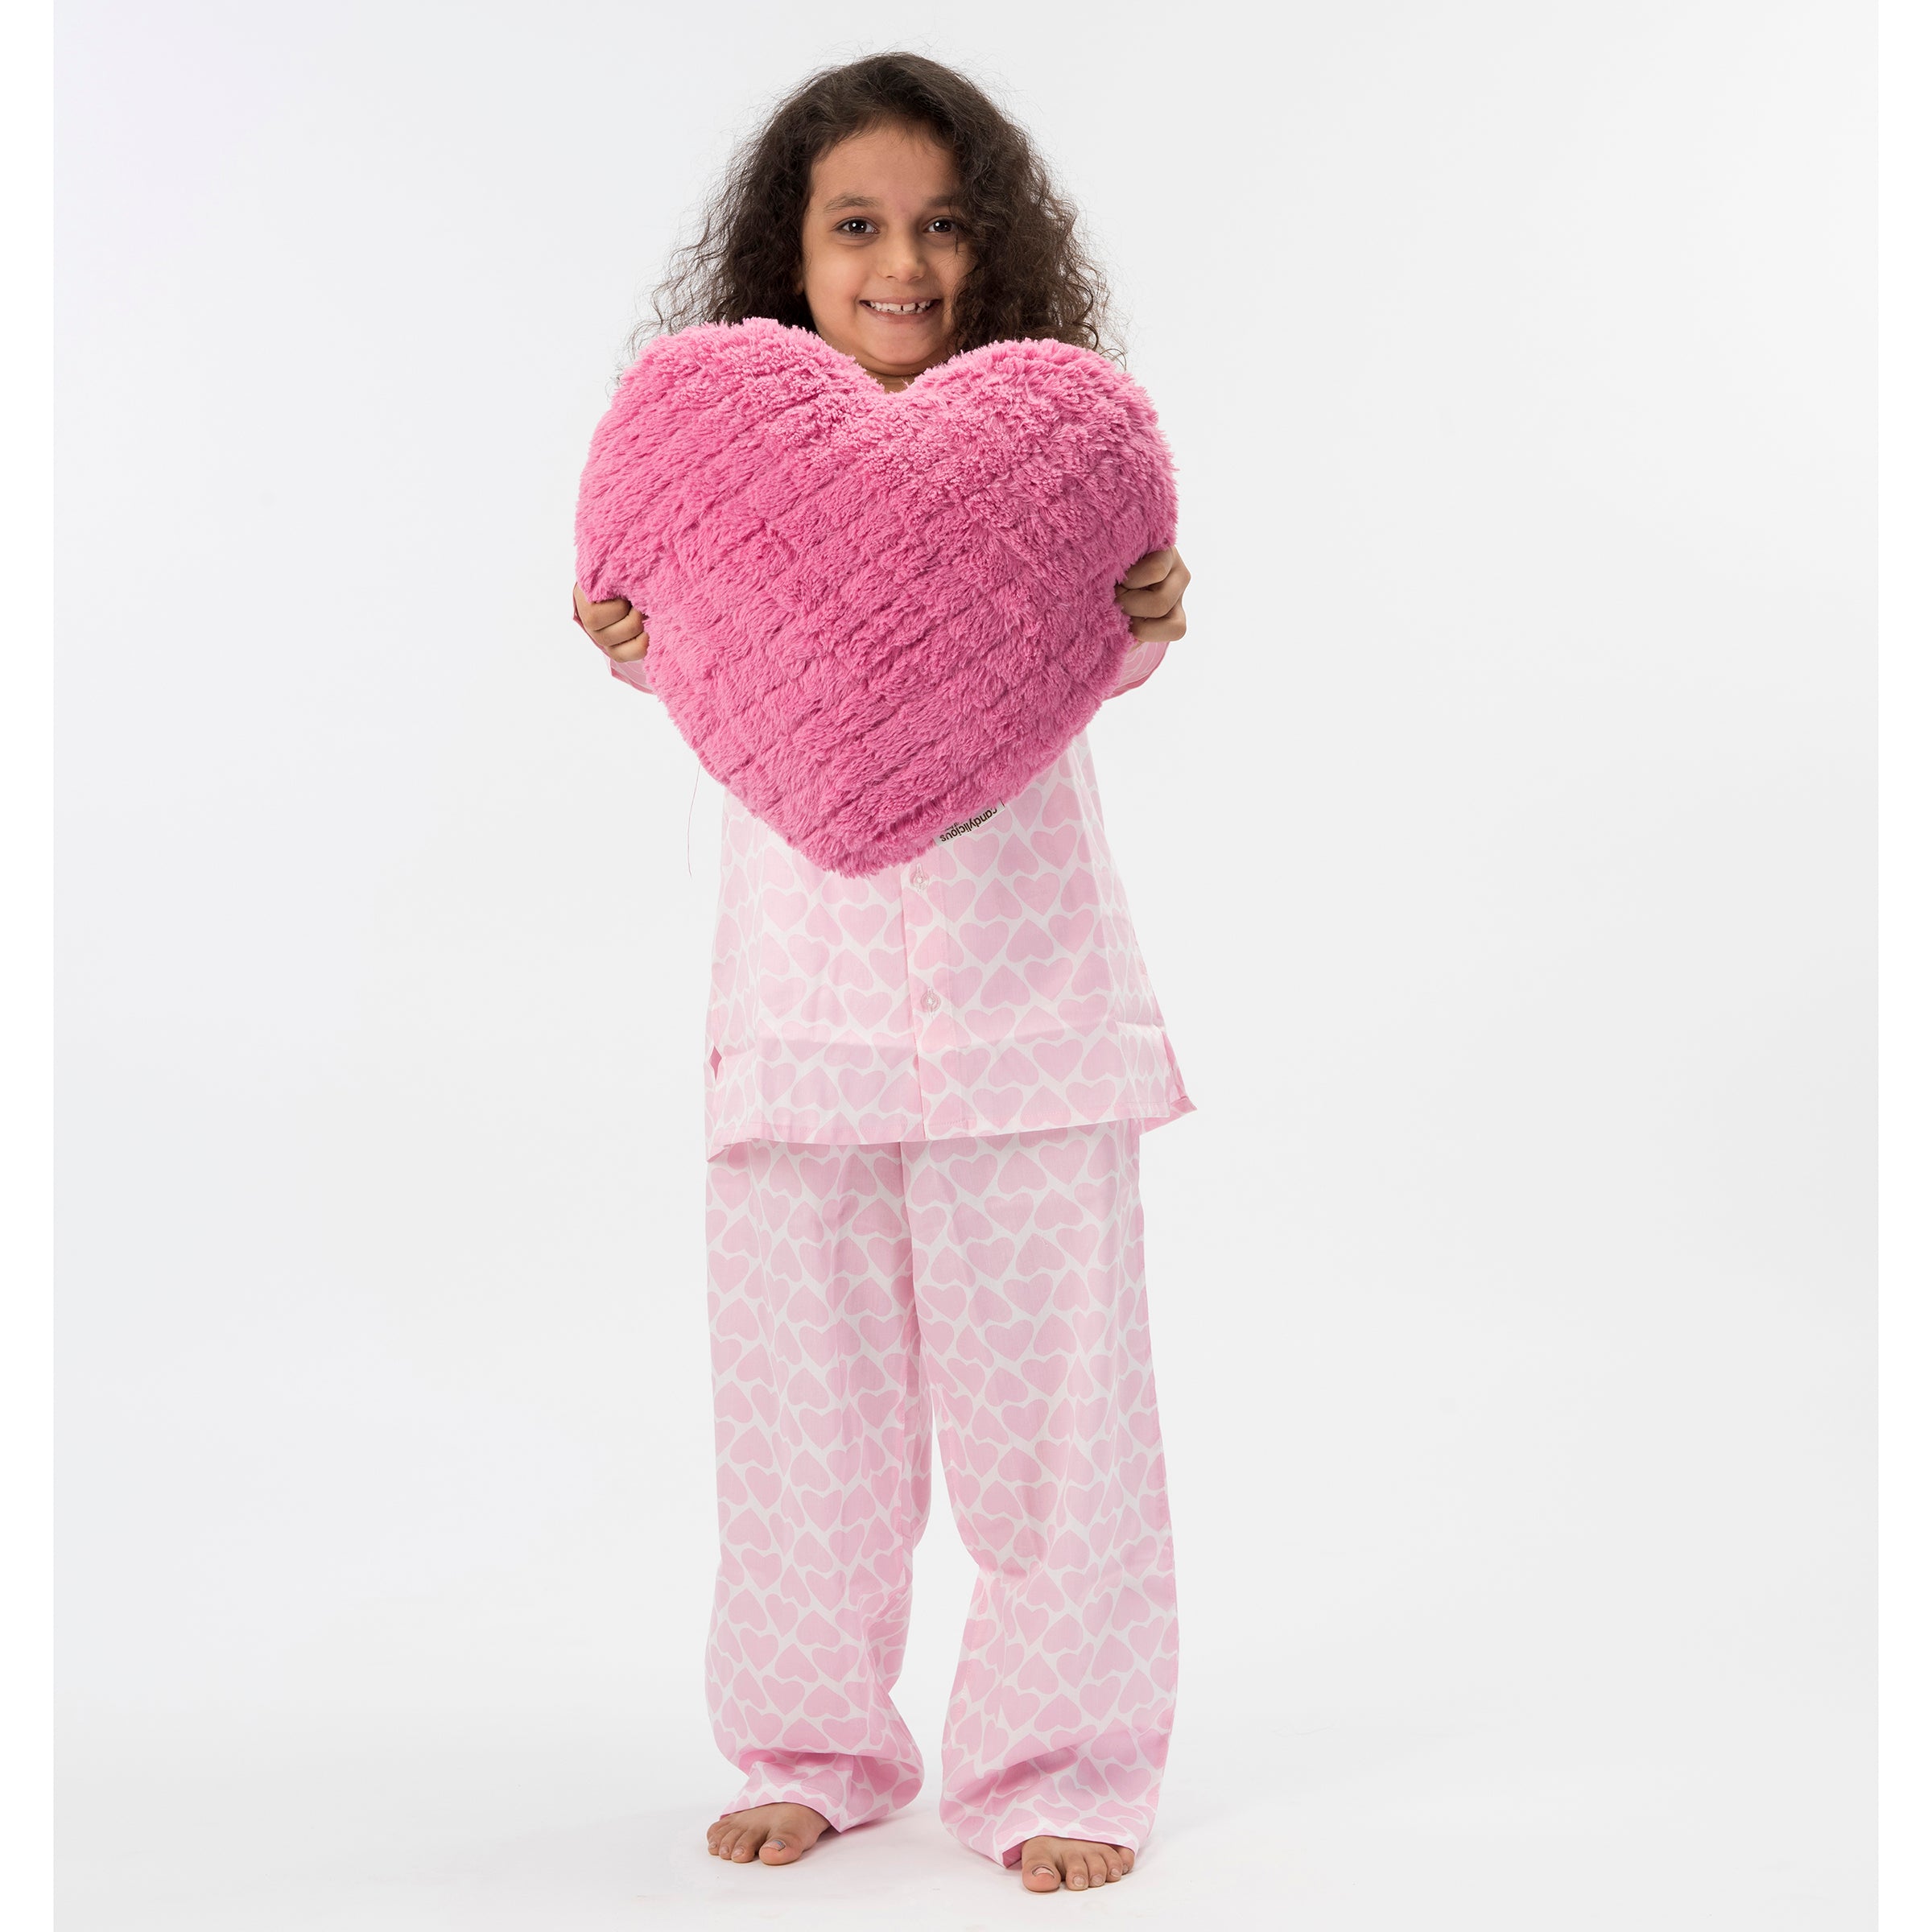 Kid's Pyjama Set - Pink Hearts